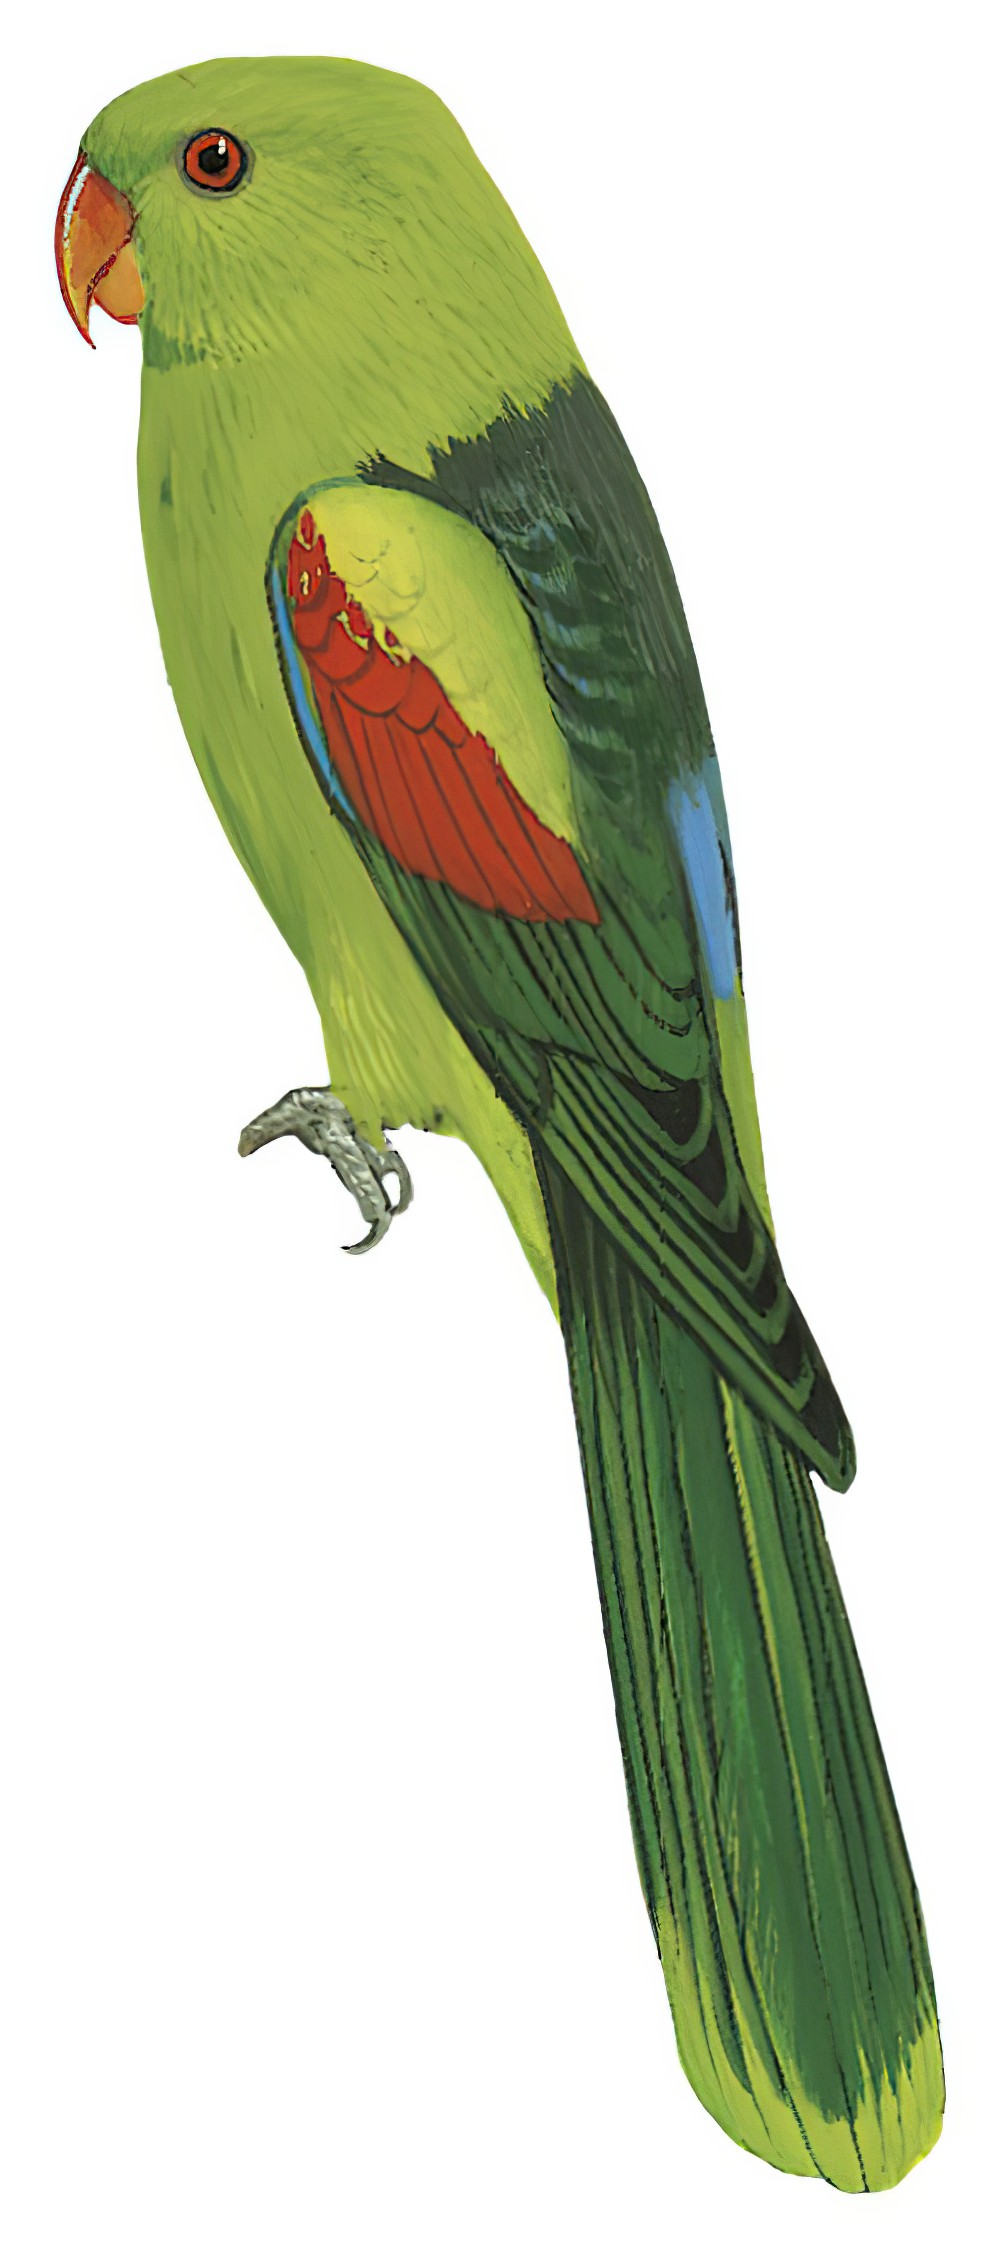 Olive-shouldered Parrot / Aprosmictus jonquillaceus